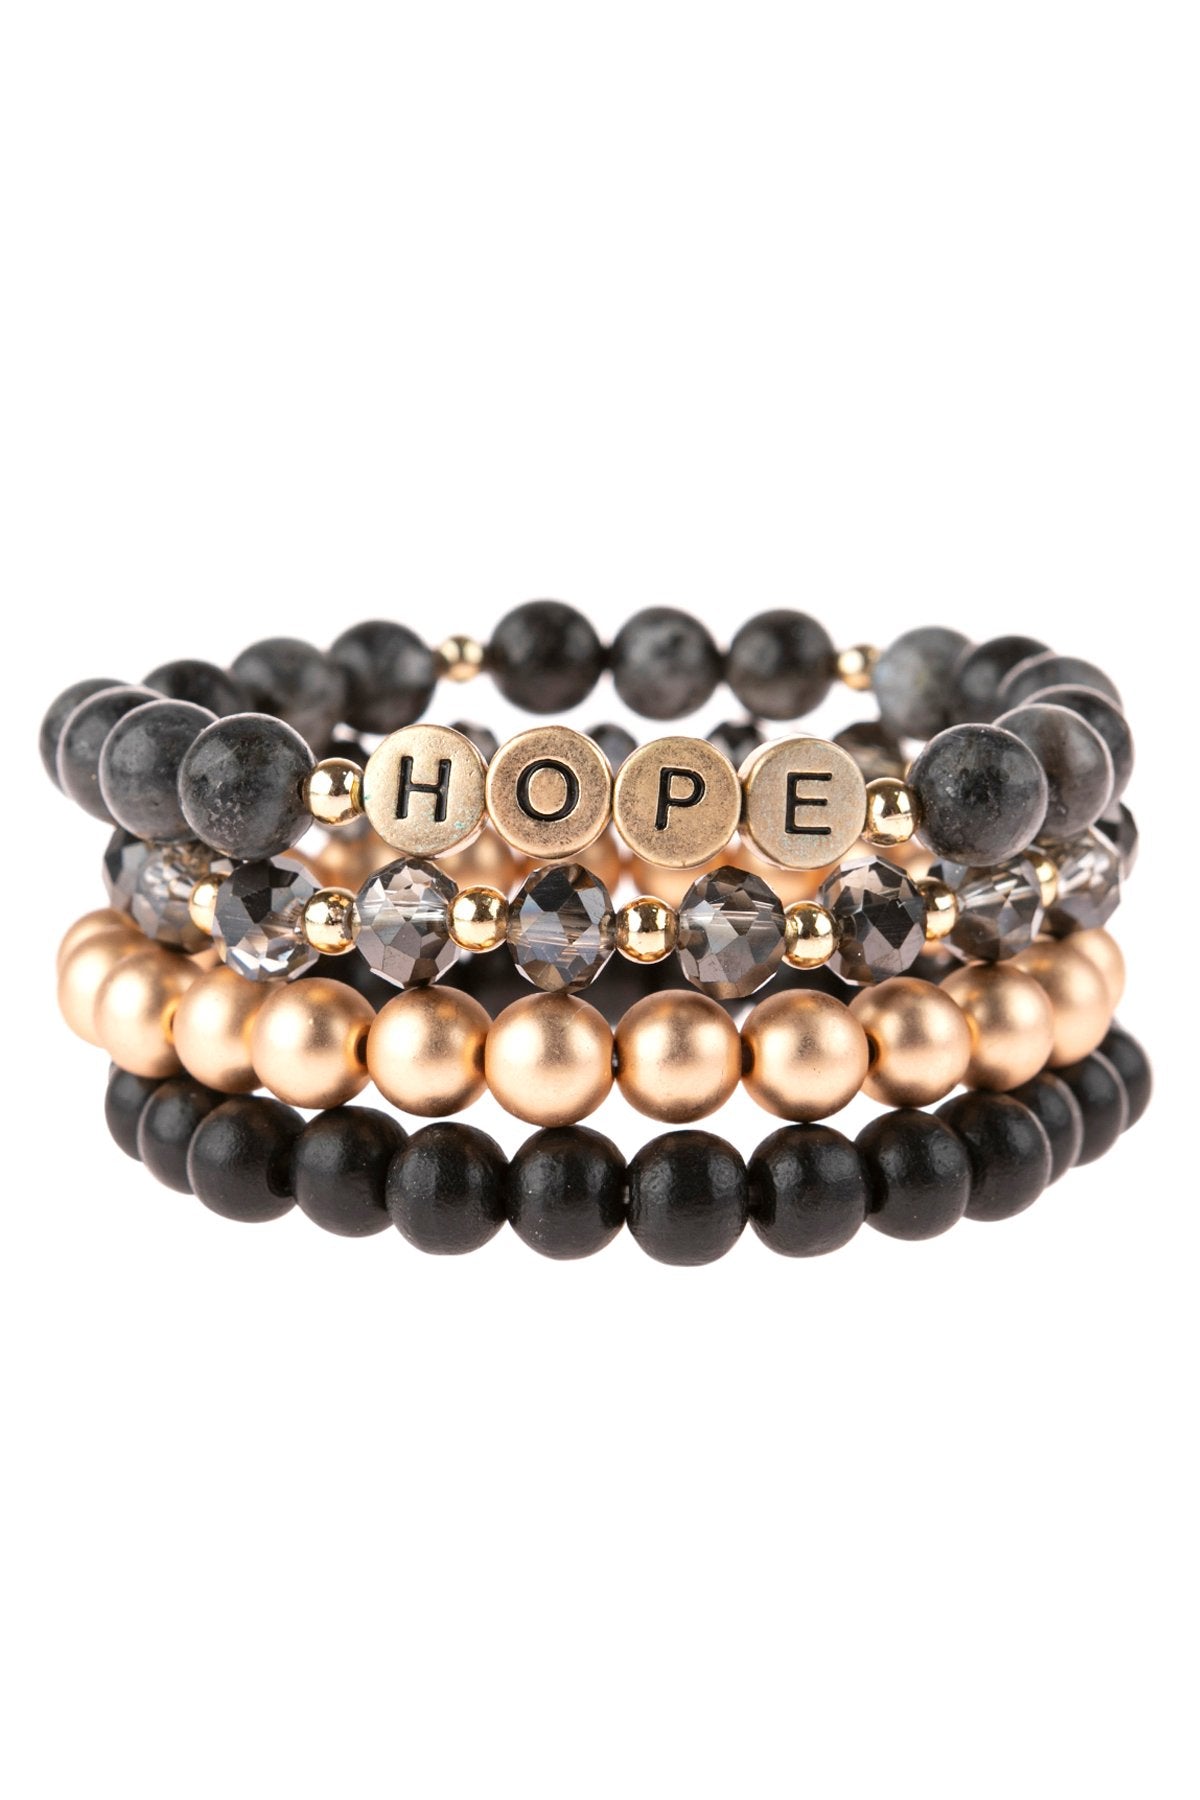 Hdb3024 - "Hope" Charm Multiline Beaded Bracelet